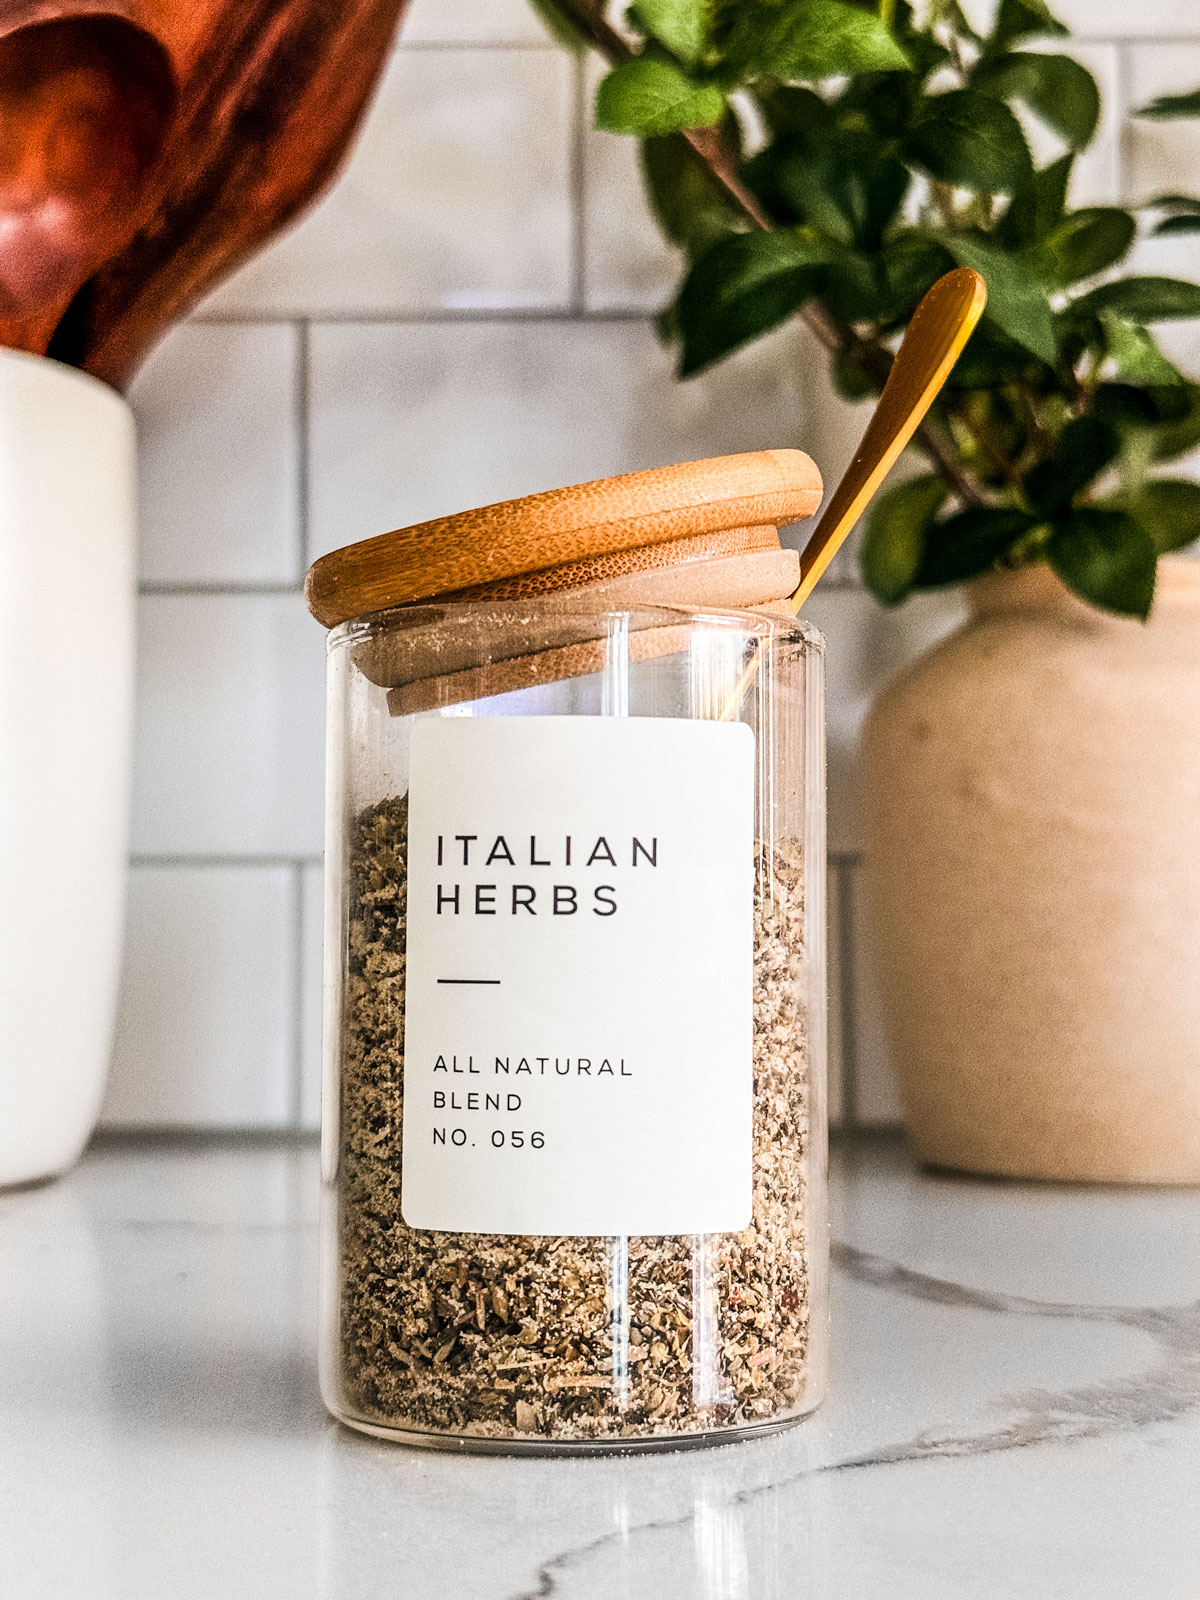 Glass jar of Italian seasoning on a white marble kitchen countertop.